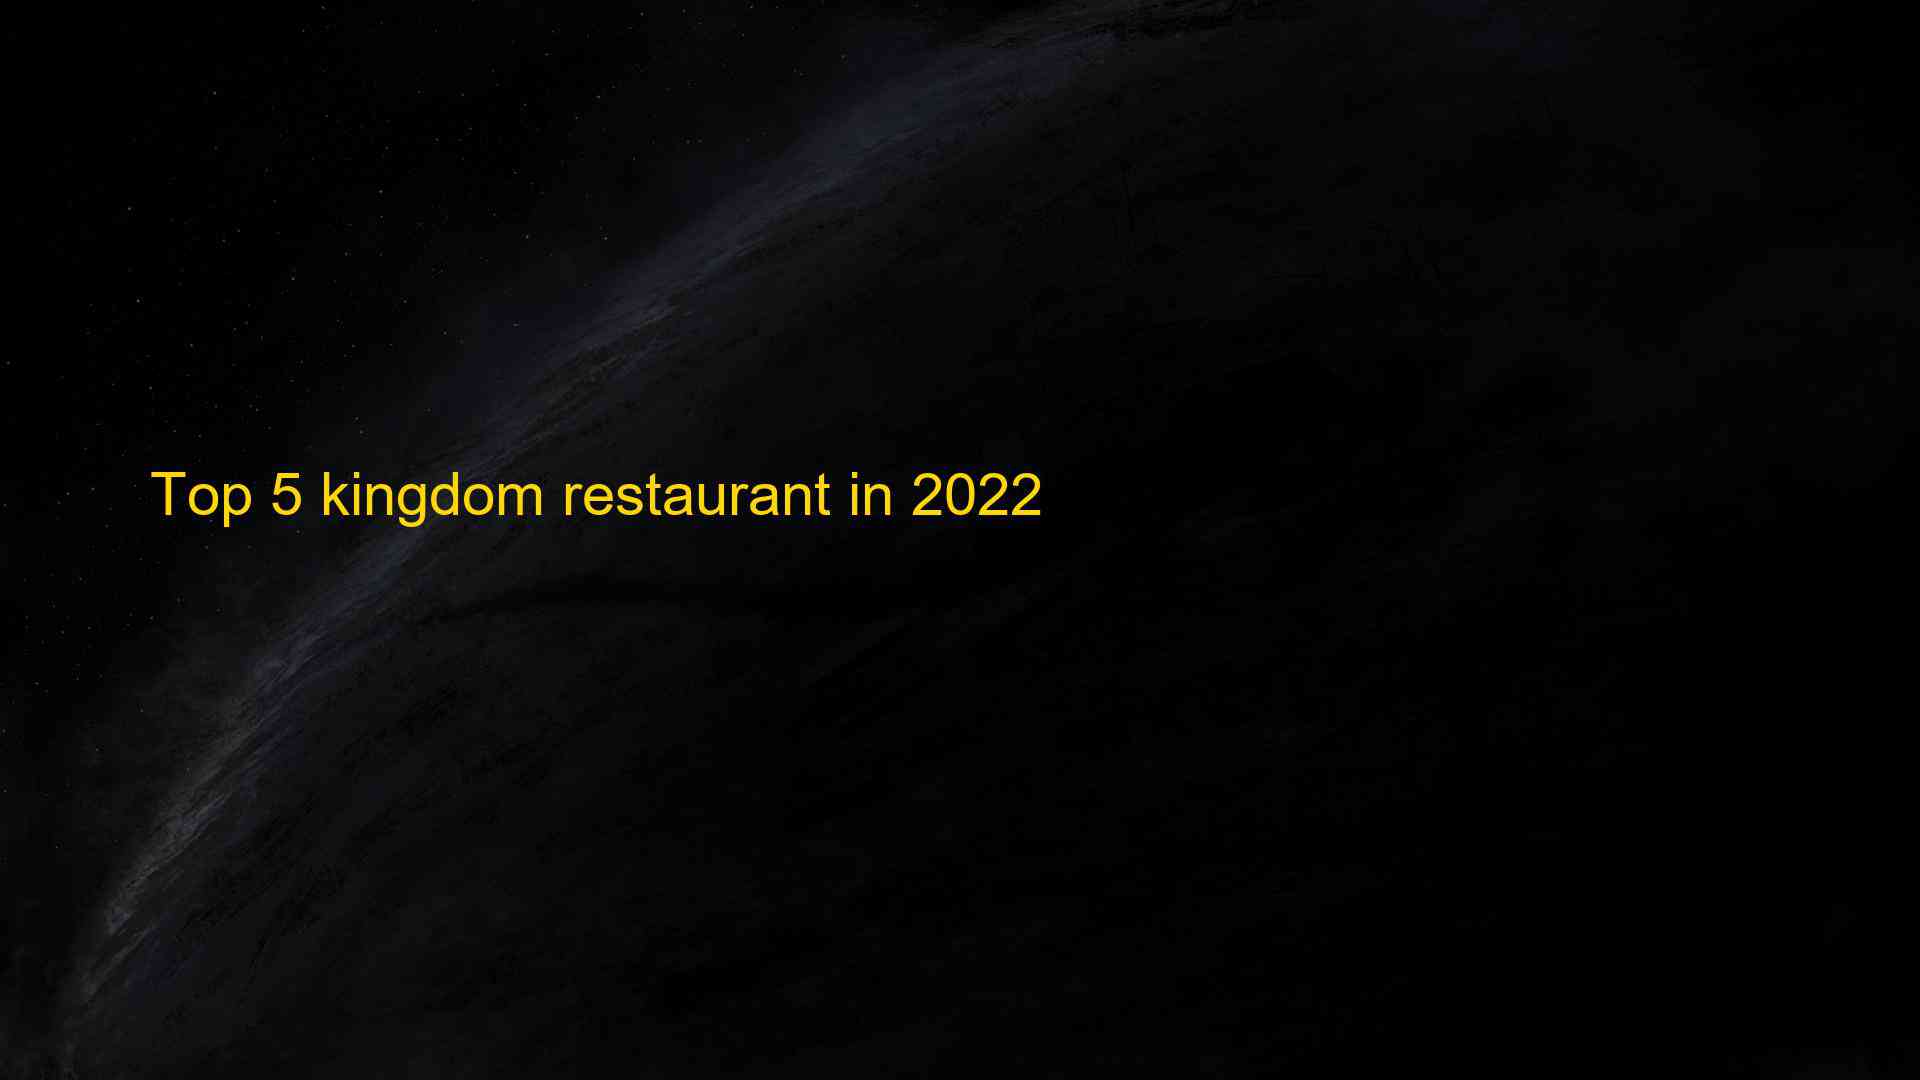 Top 5 kingdom restaurant in 2022 1663503764